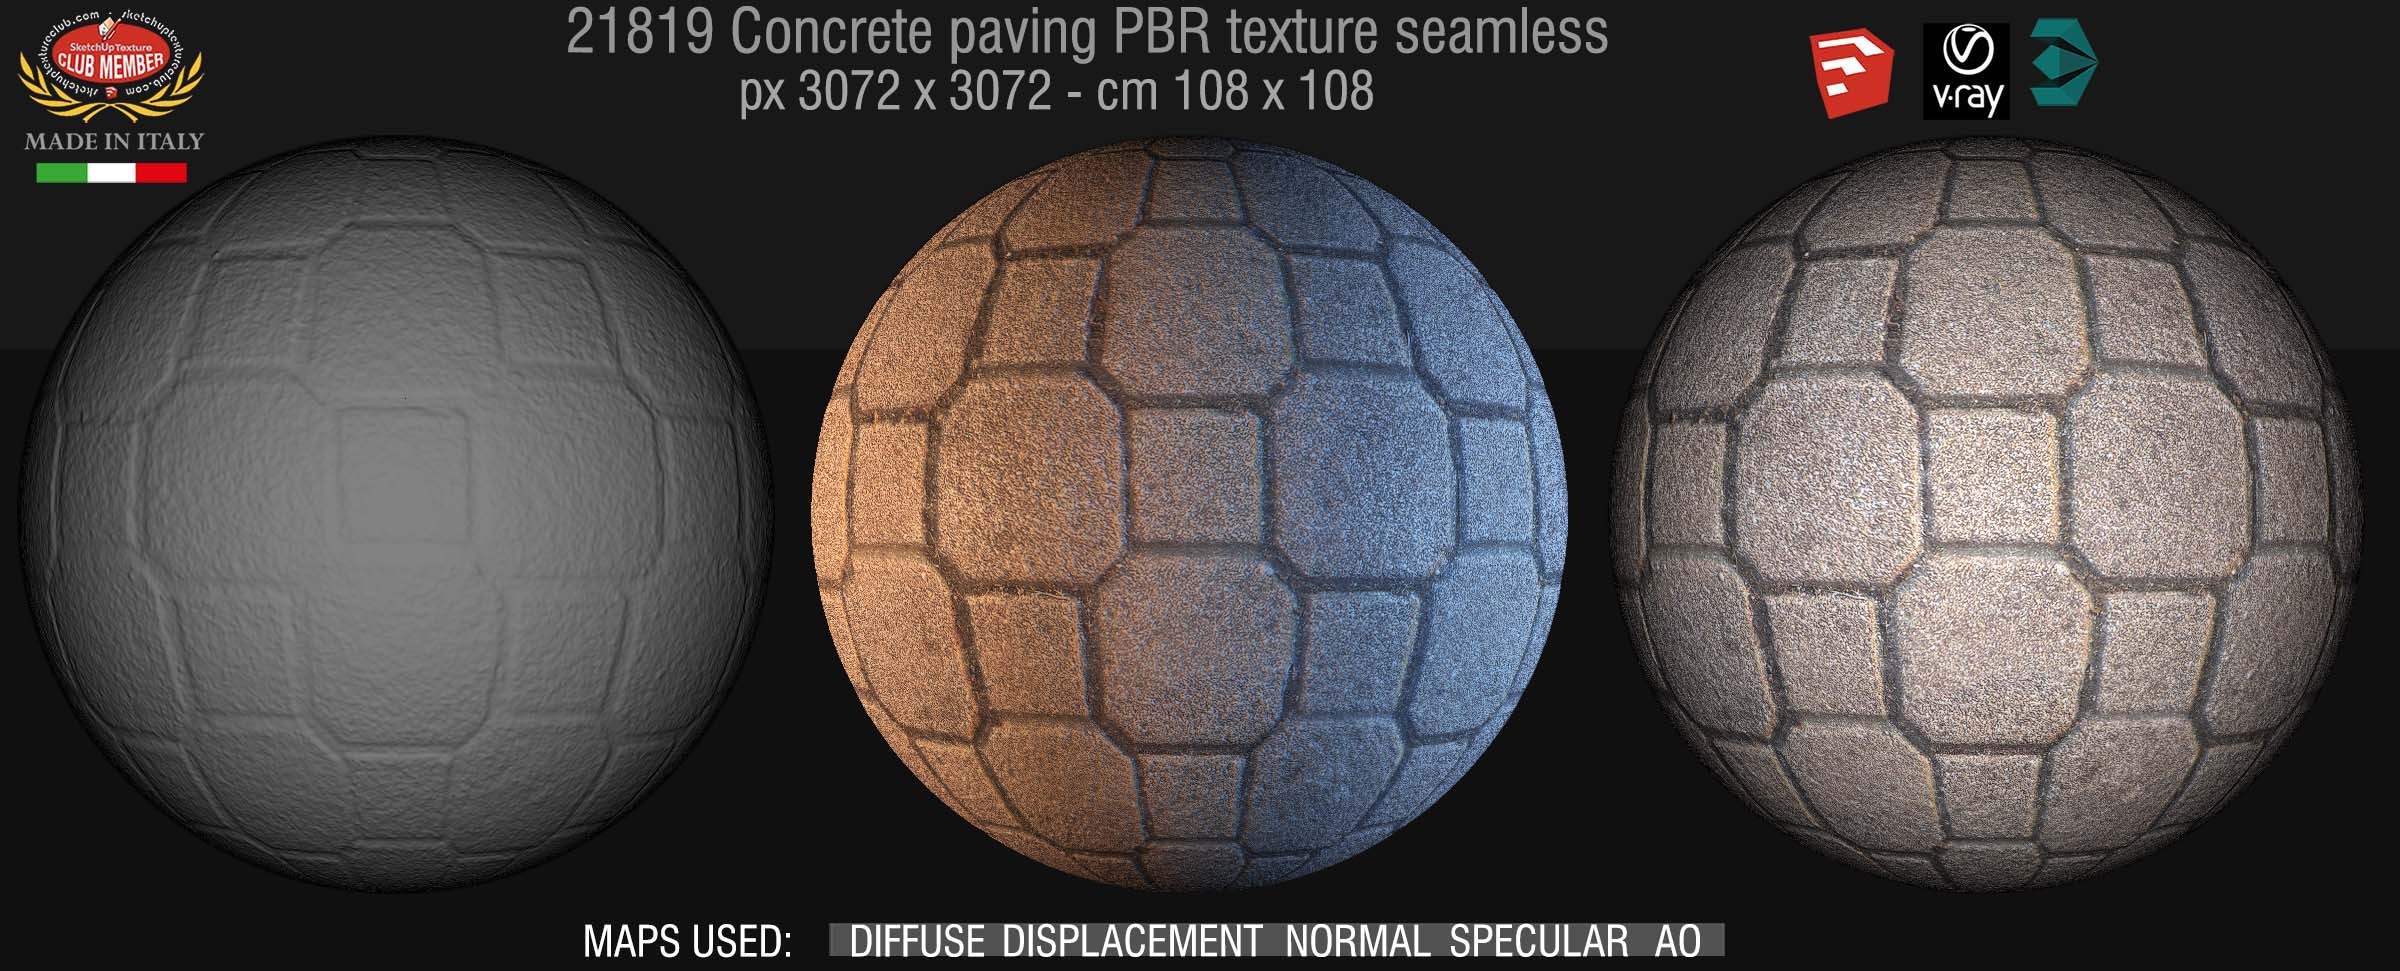 concrete paving PBR texture seamless 21819